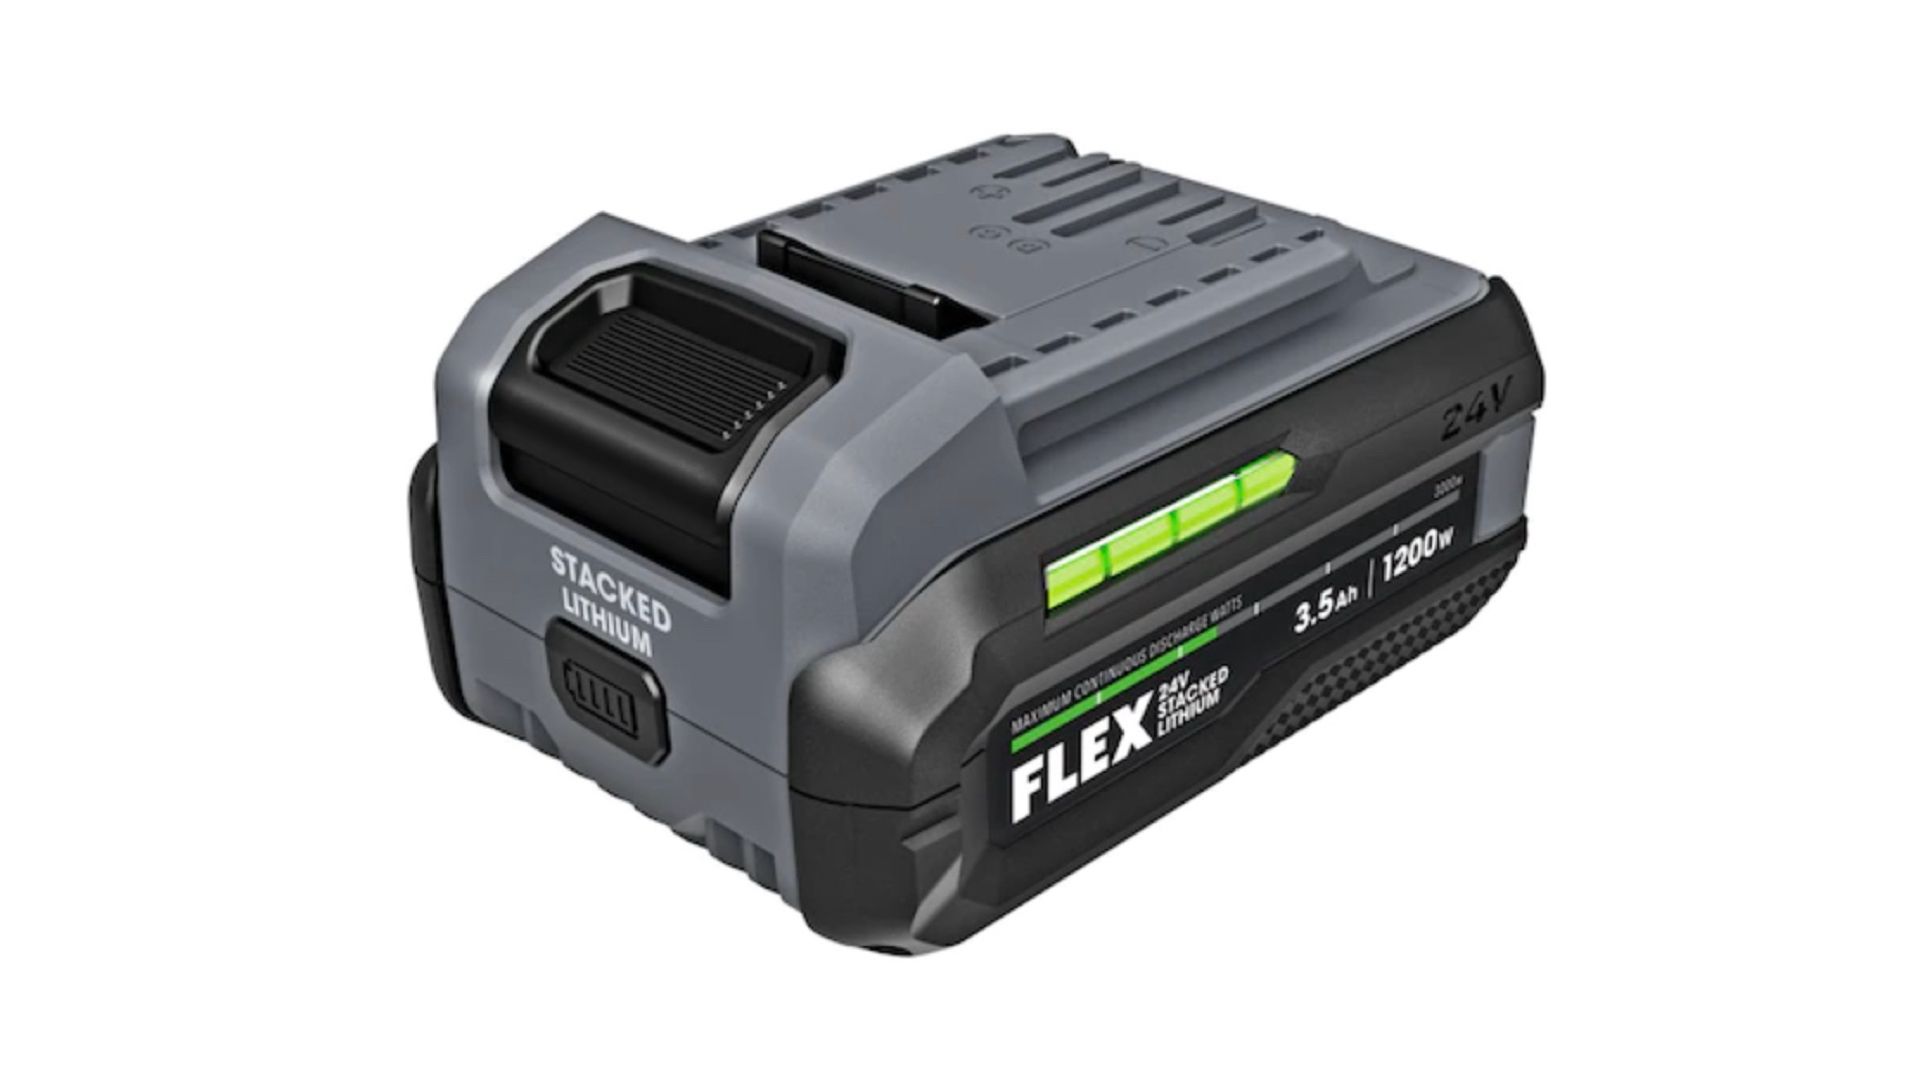 FLEX Tools 24V stacked battery.